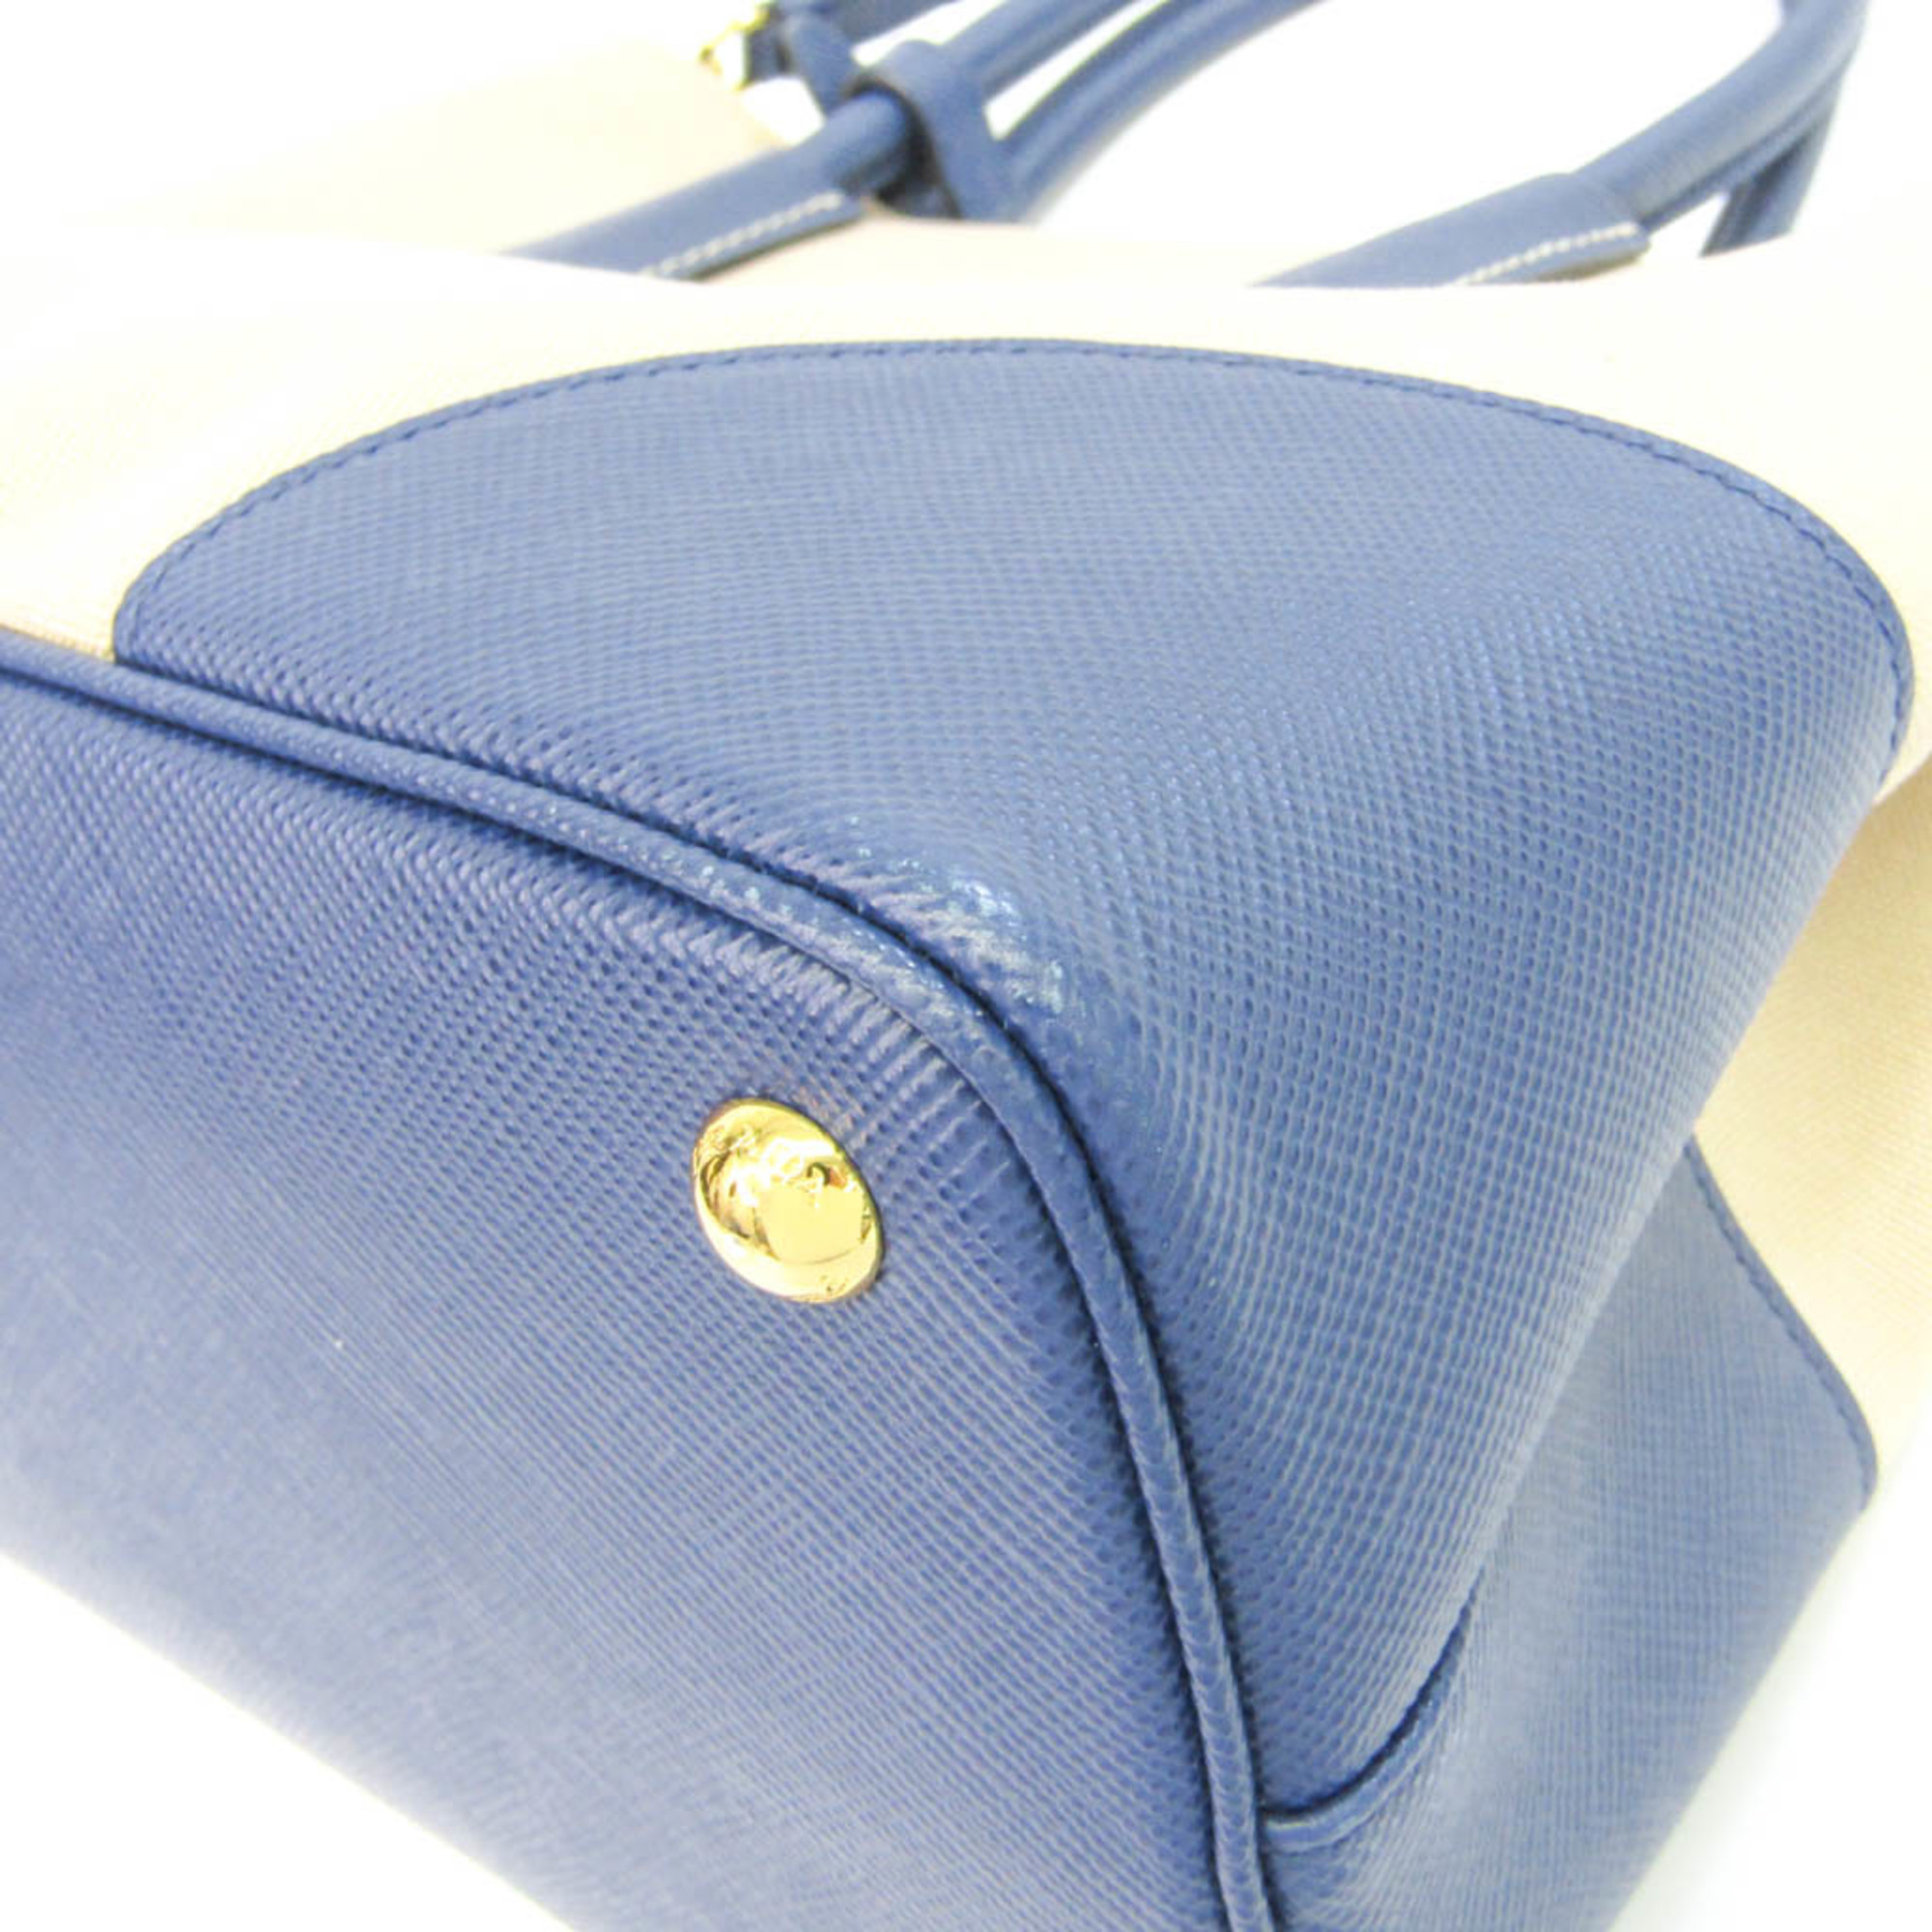 Prada Saffiano Double BN2775 Women's Canvas,Leather Handbag,Shoulder Bag Beige,Blue